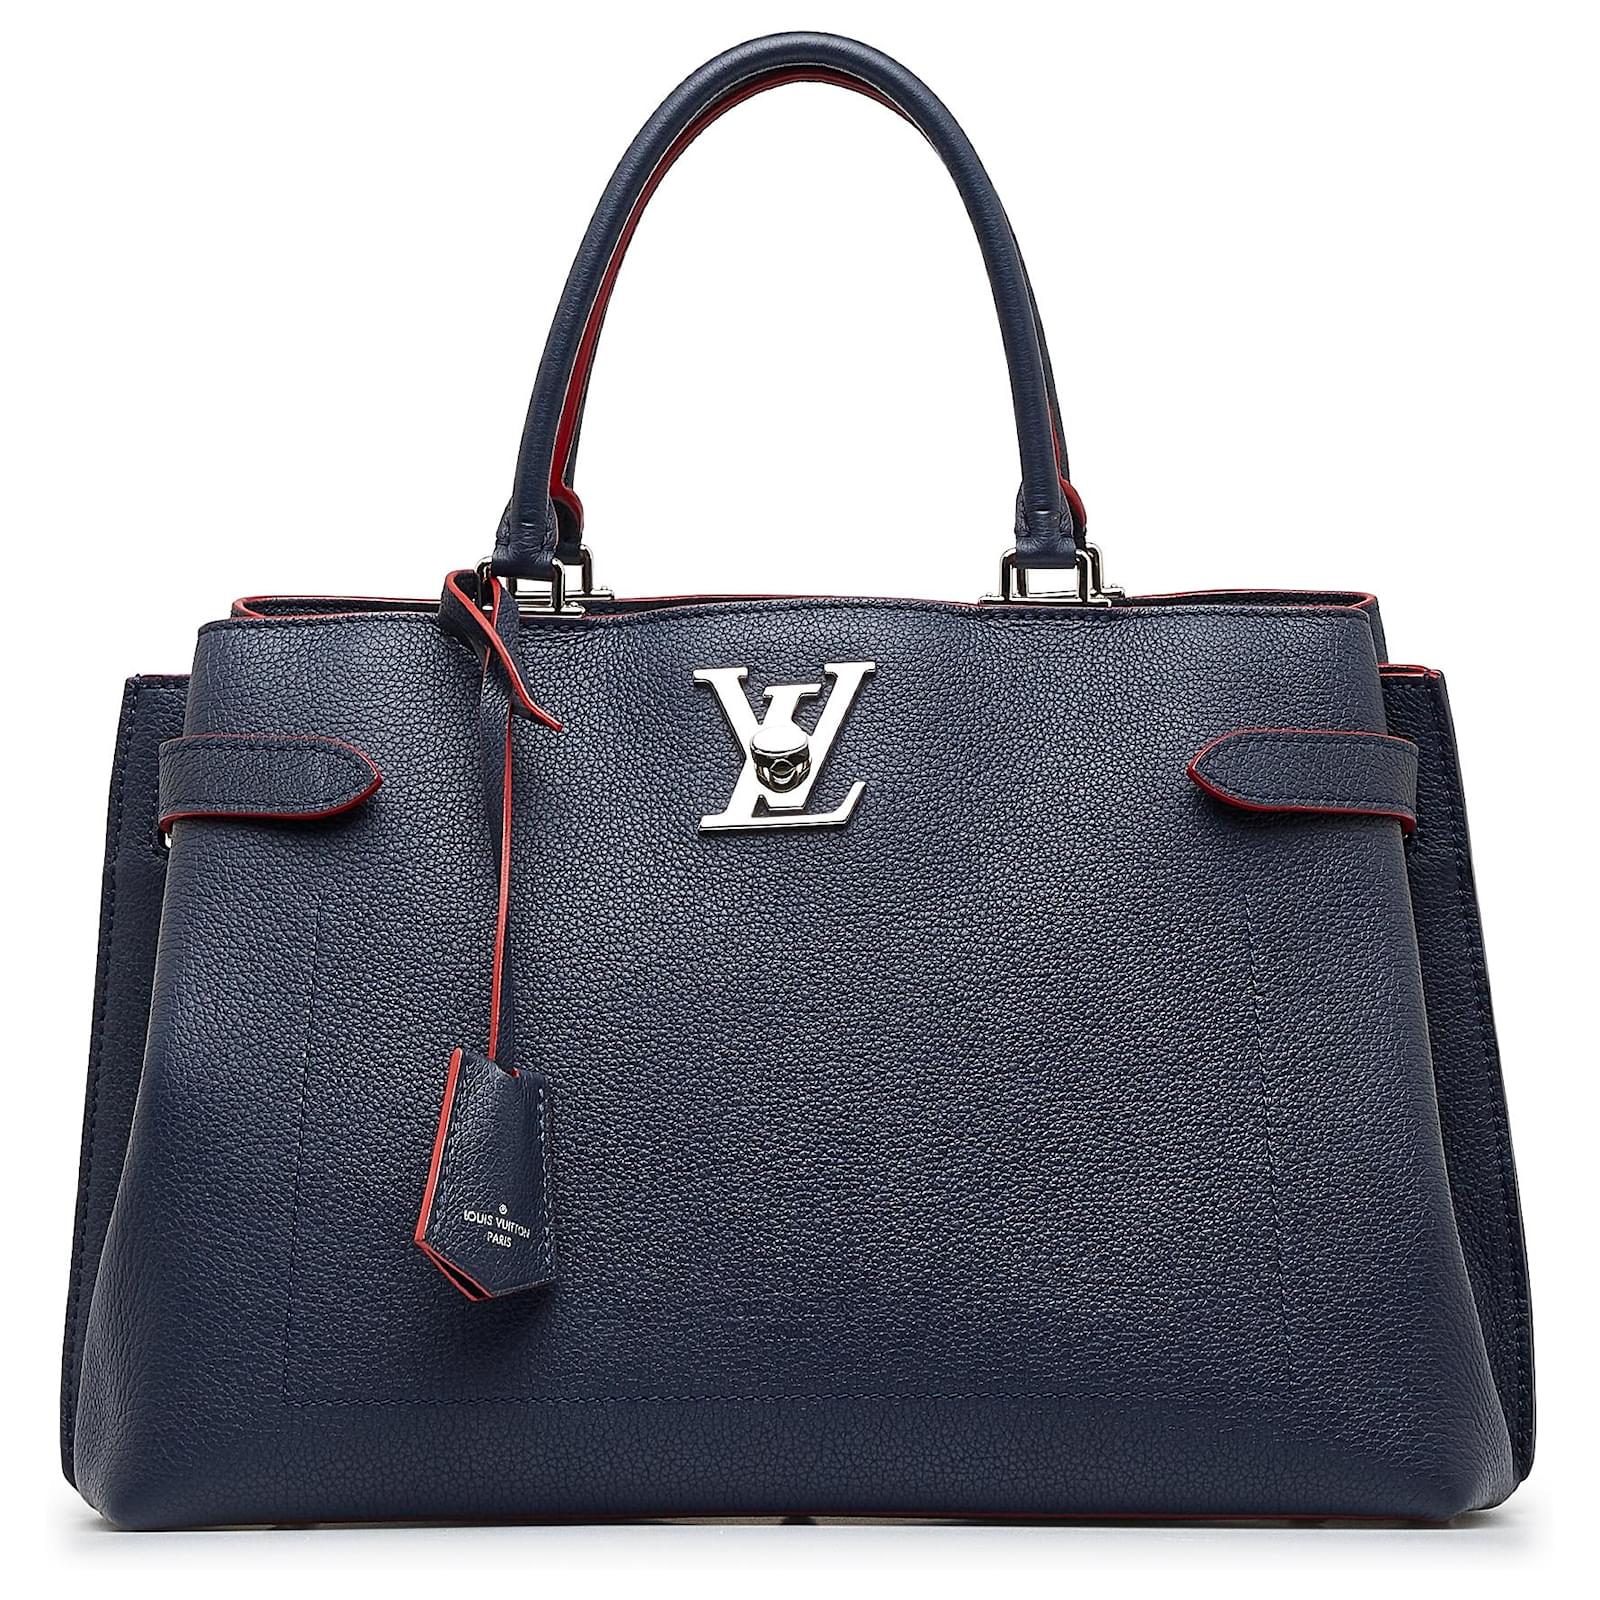 Neo monceau leather handbag Louis Vuitton Multicolour in Leather